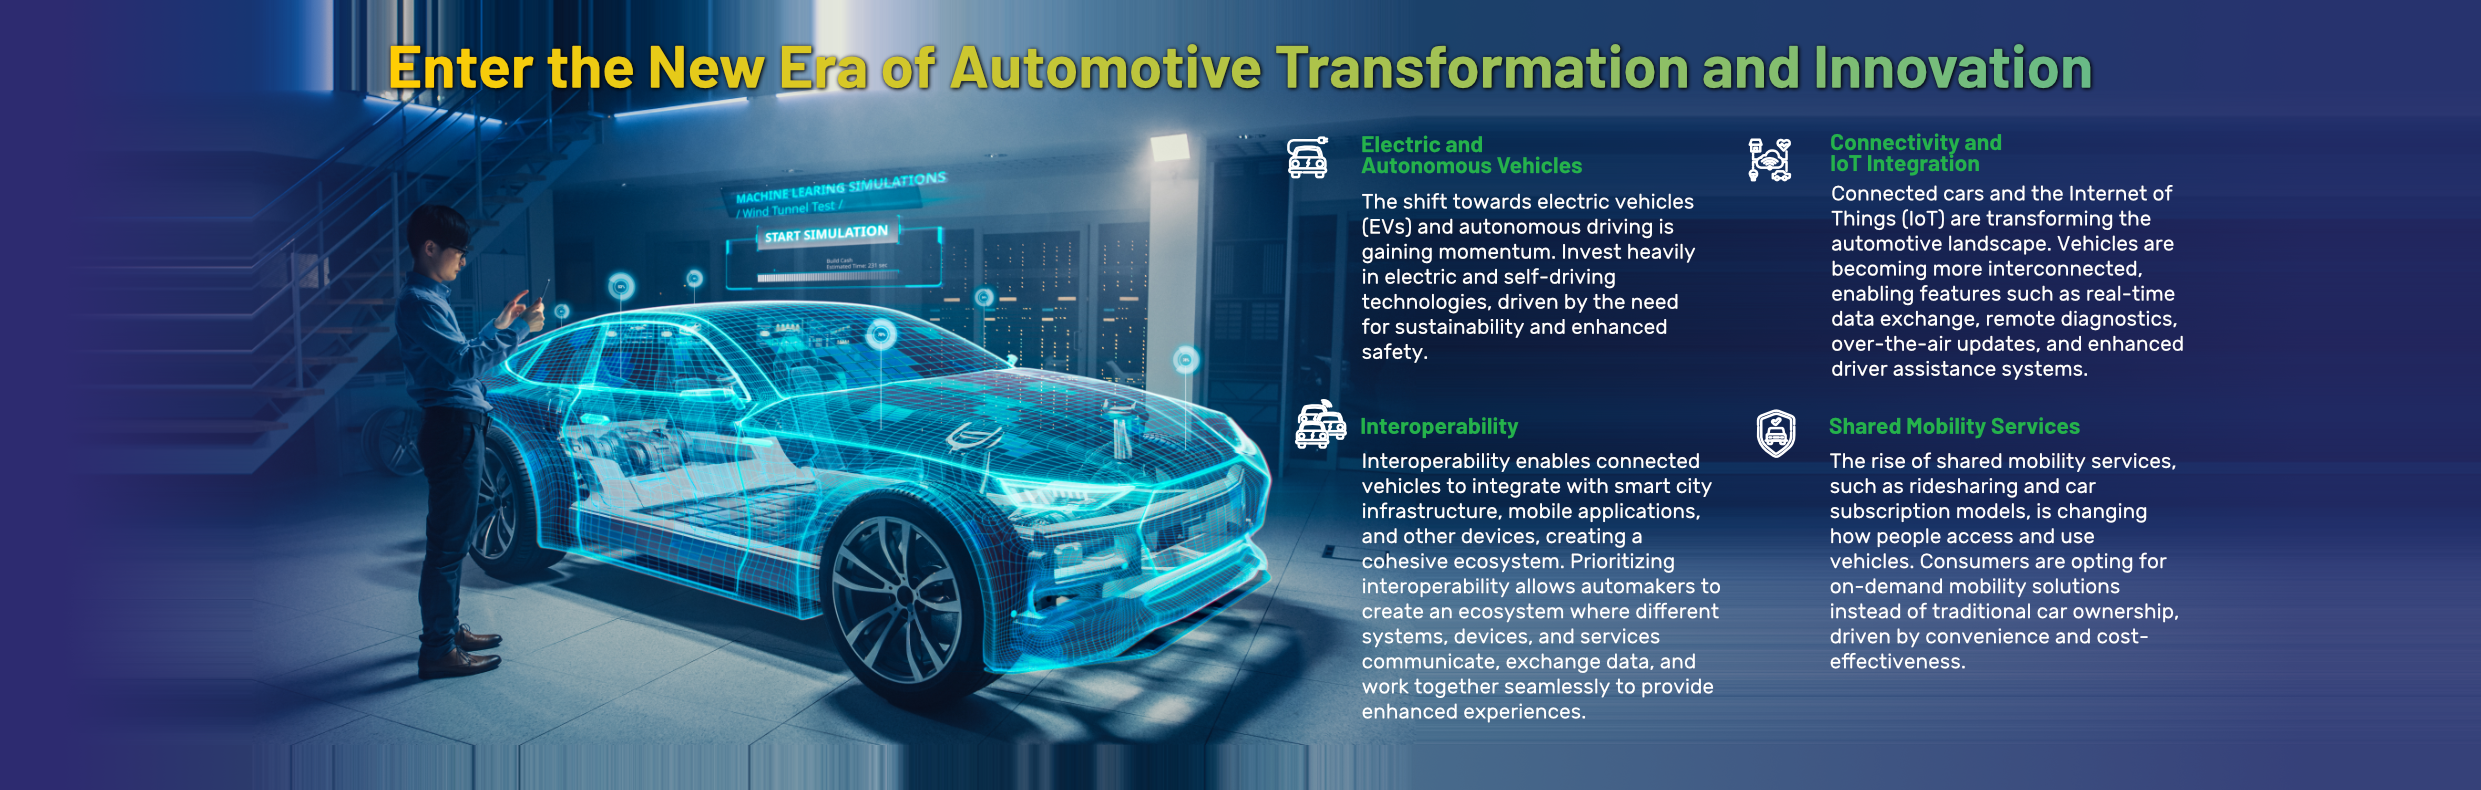 New Era of Automotive Transformation